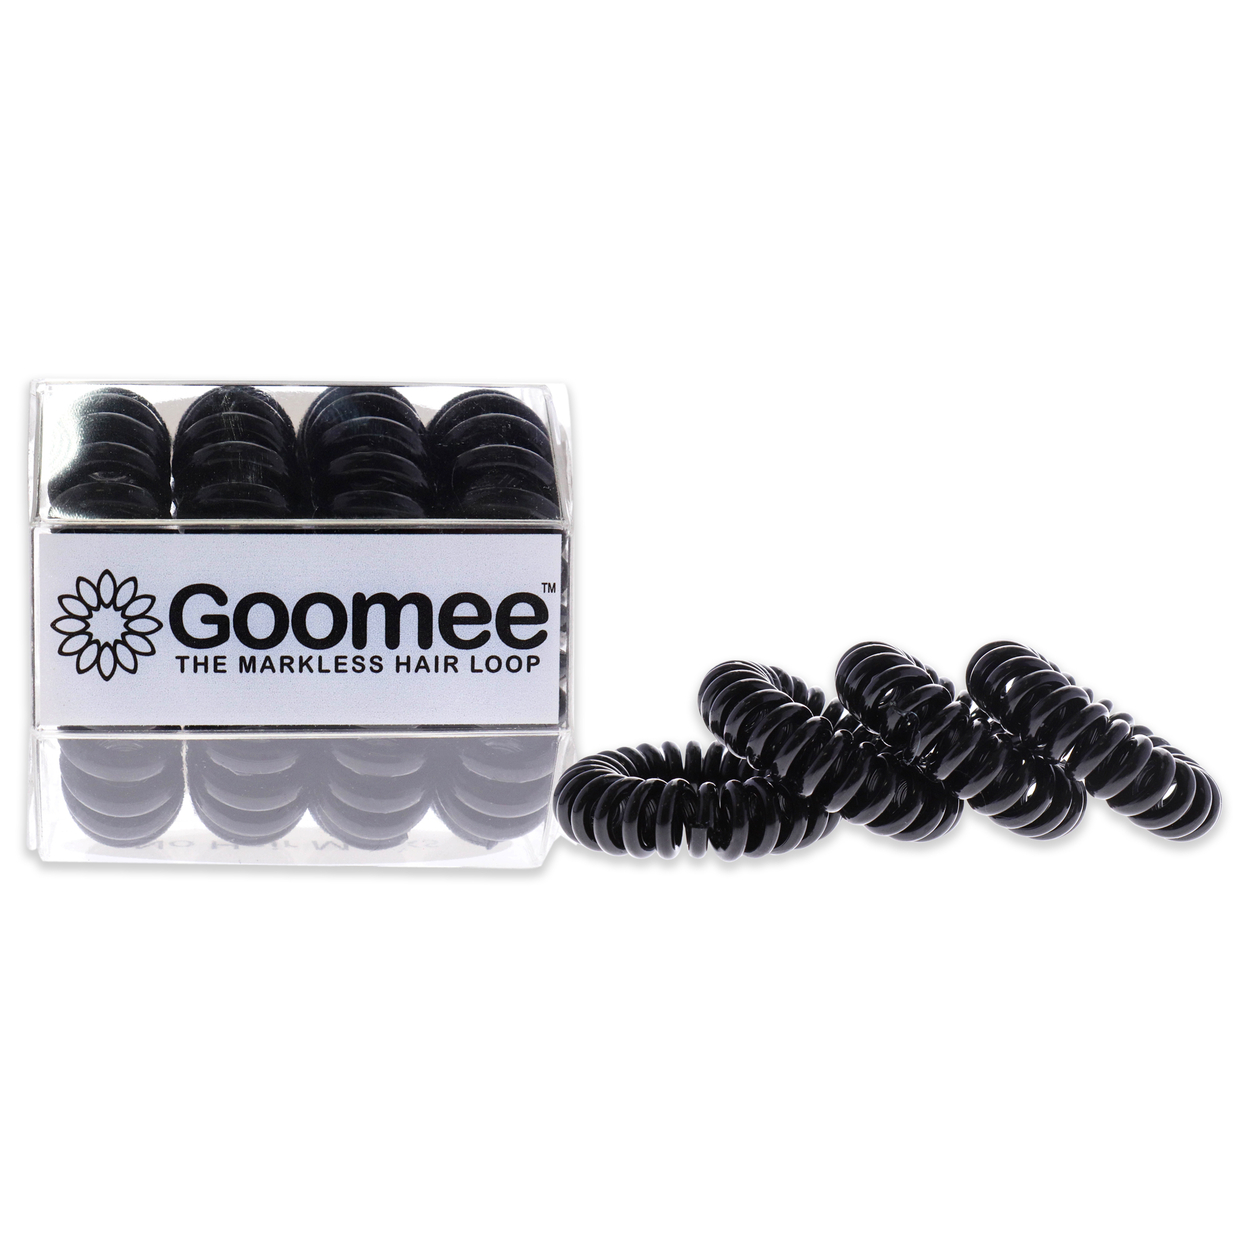 Goomee The Markless Hair Loop Set - Midnight Black Hair Tie 4 Pc